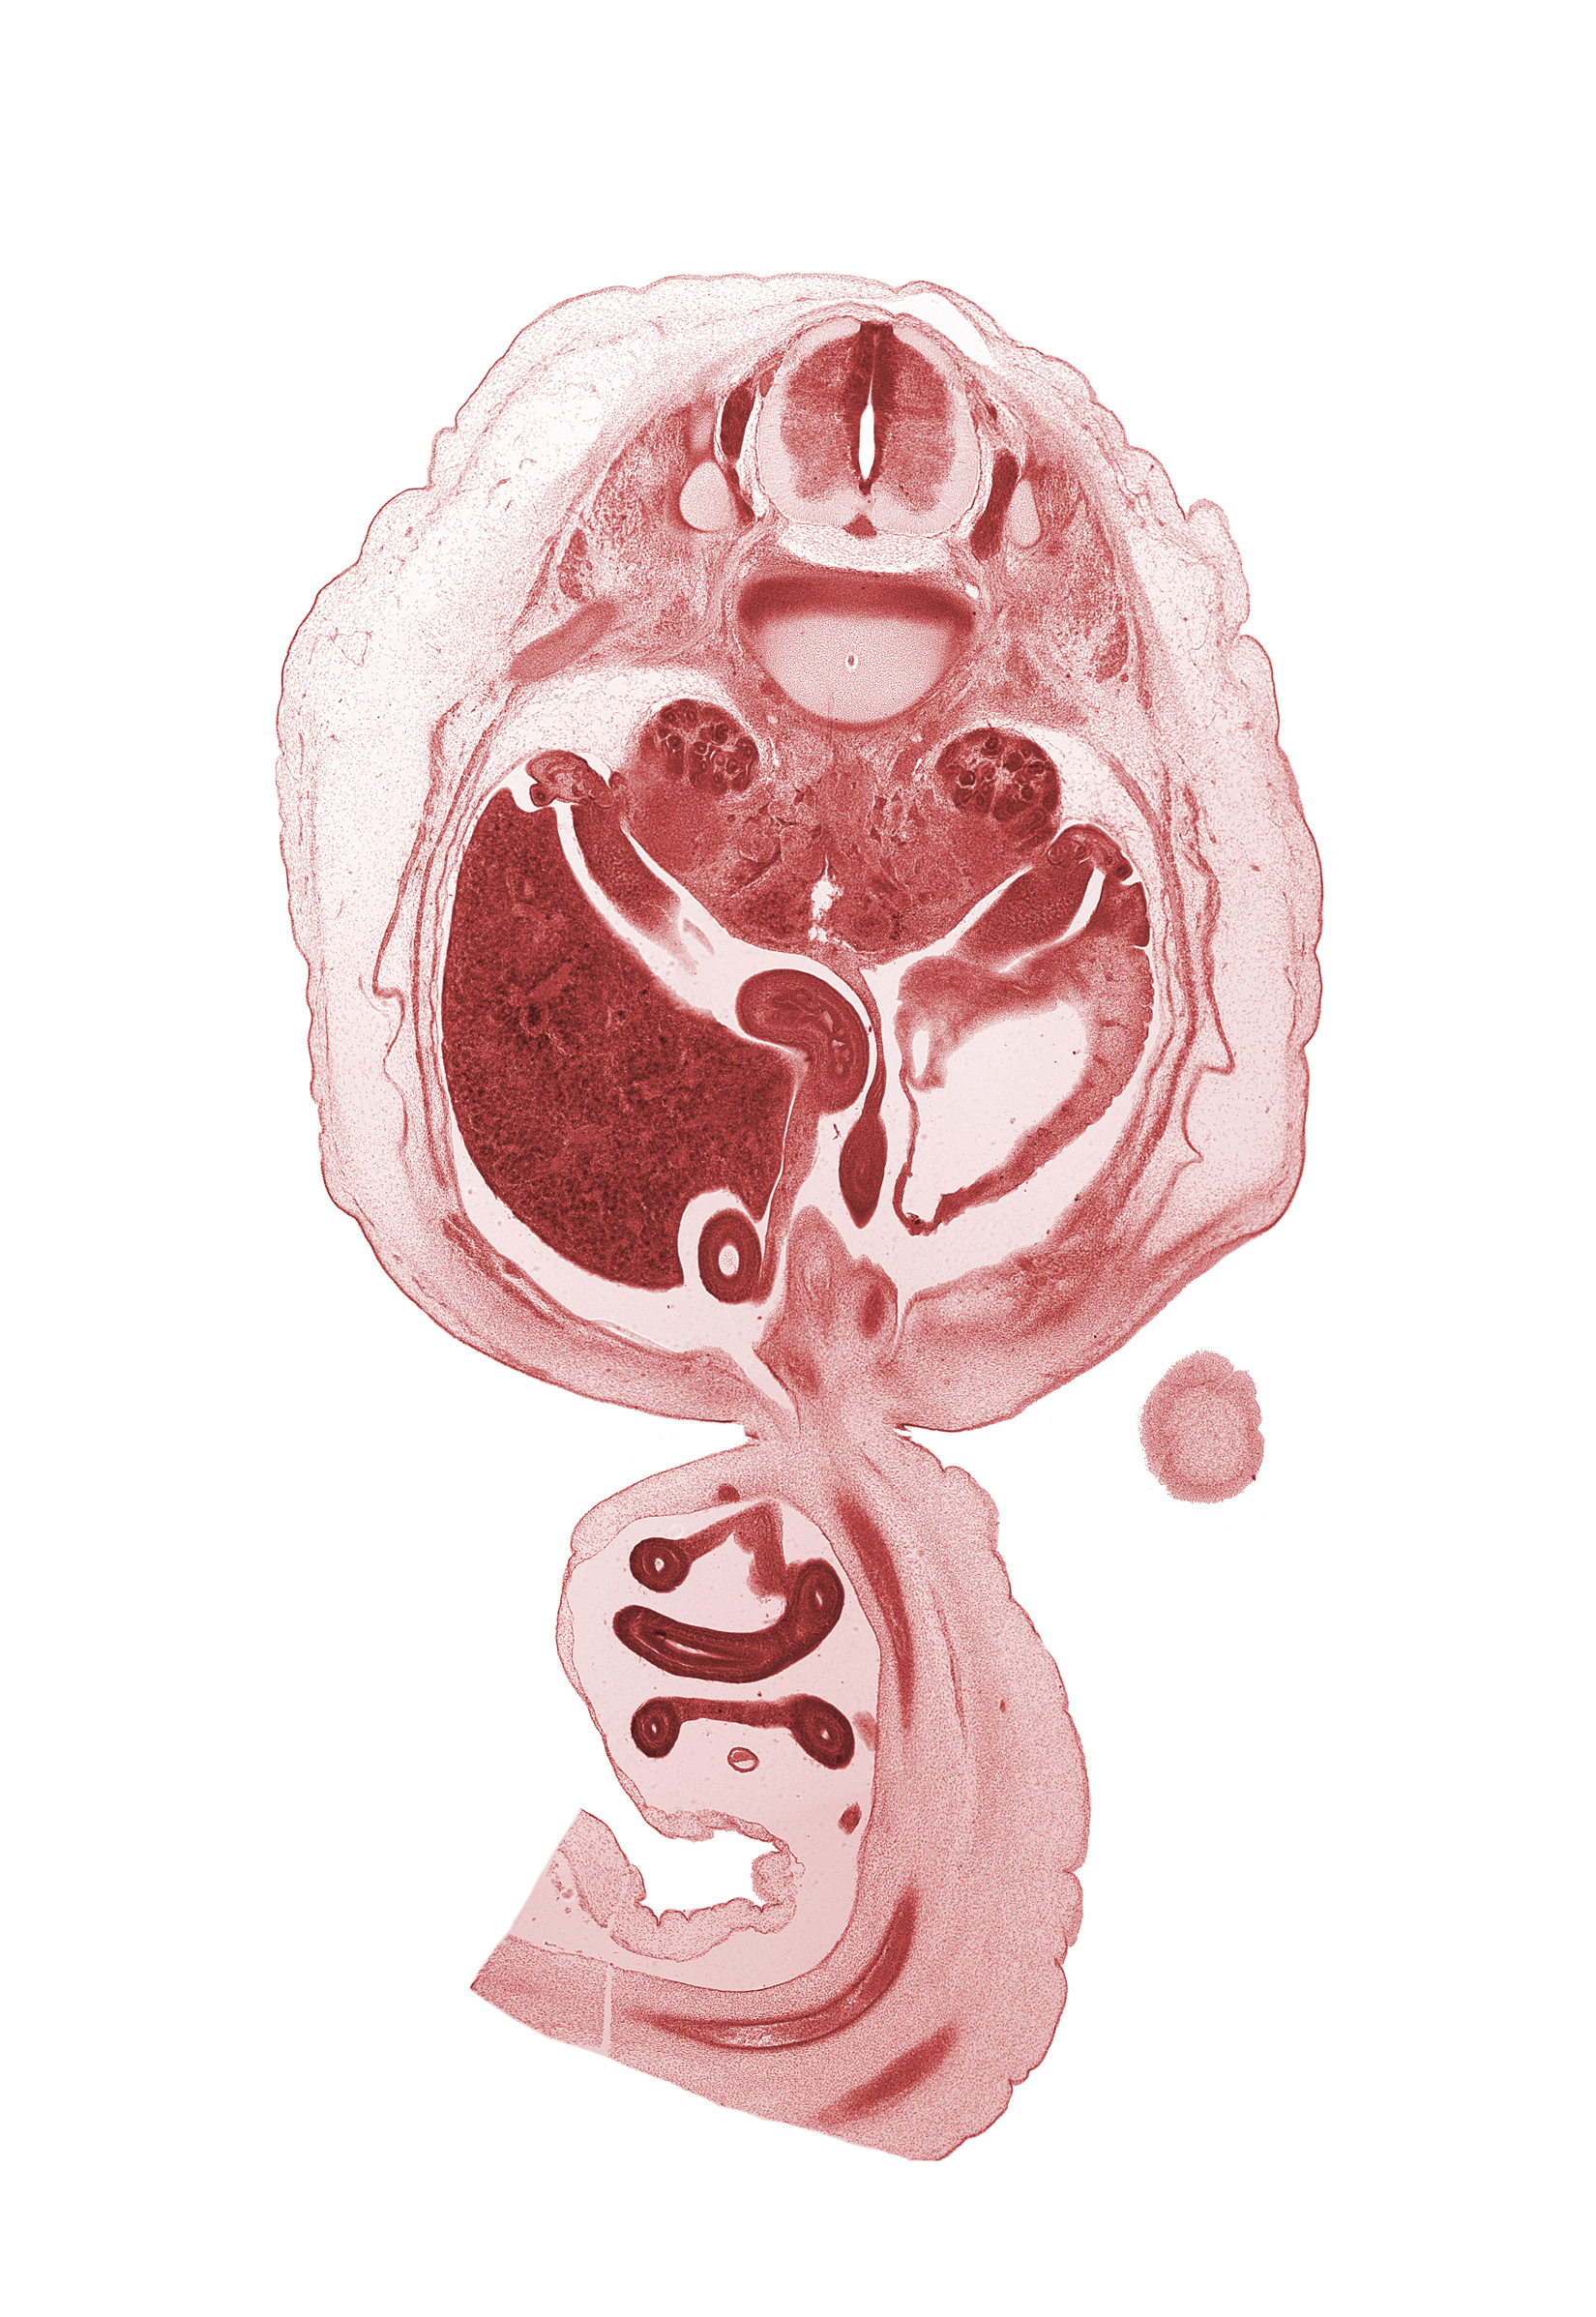 T-12 / L-1 intervertebral disc, T-12 spinal ganglion, T-12 spinal nerve, allantois, aorta, centrum of L-1 vertebra, cephalic edge of lower limb, duodenum, hindgut (colon), jejunum, kidney (metanephros), left umbilical artery, lesser sac (omental bursa), mesentery, mesocolon, proximal limb of herniated midgut, right umbilical artery, superior pole of right kidney (metanephros), testis